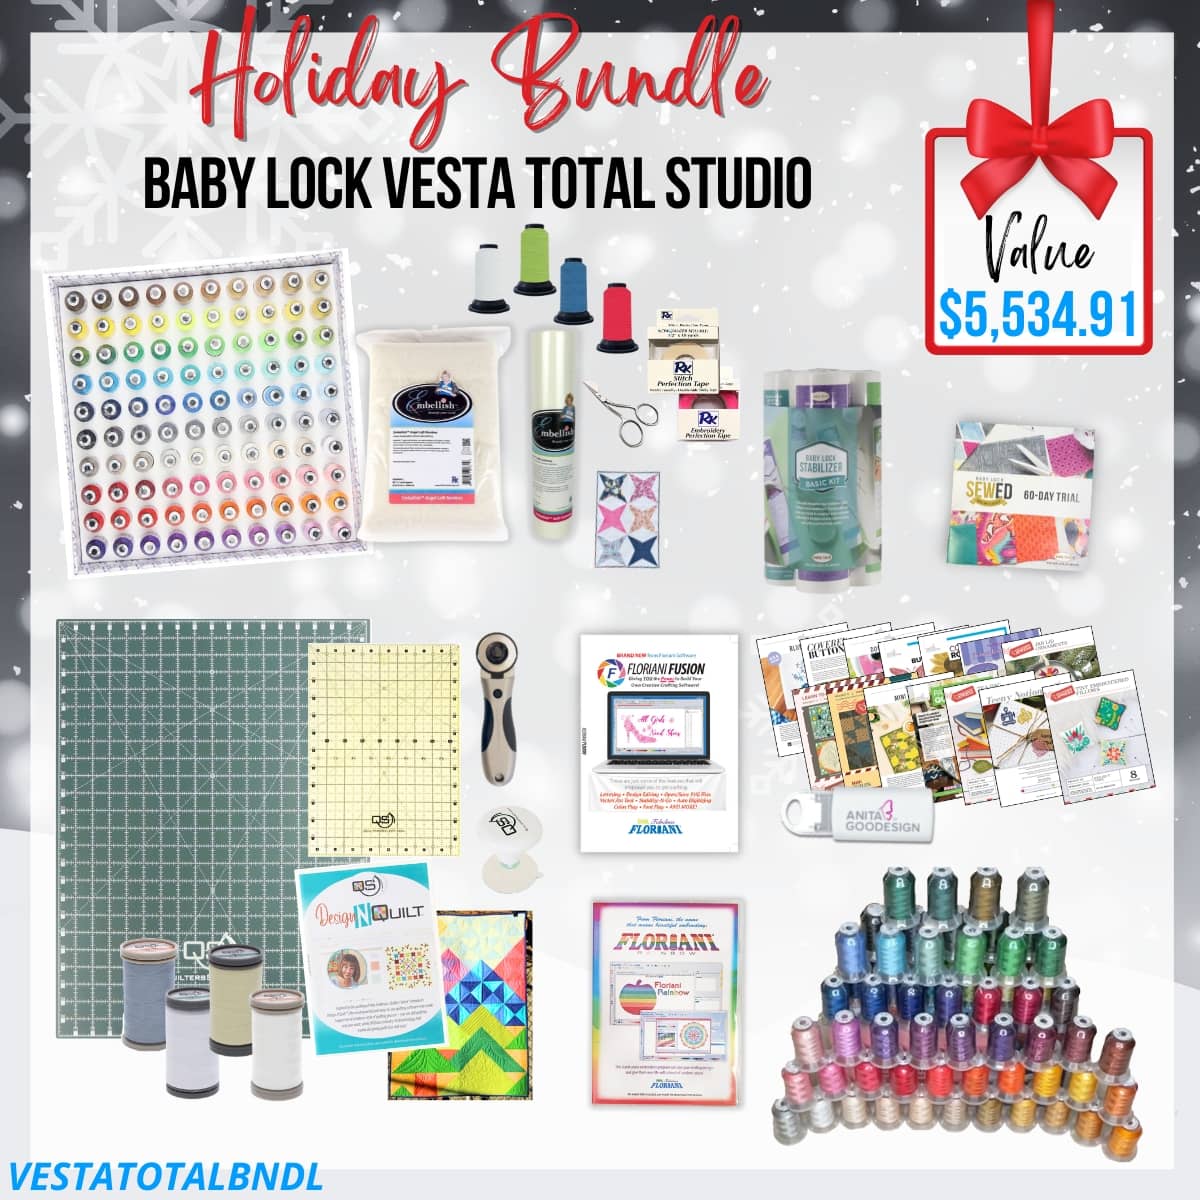 Baby Lock Vesta Total Studio holiday sale bundle